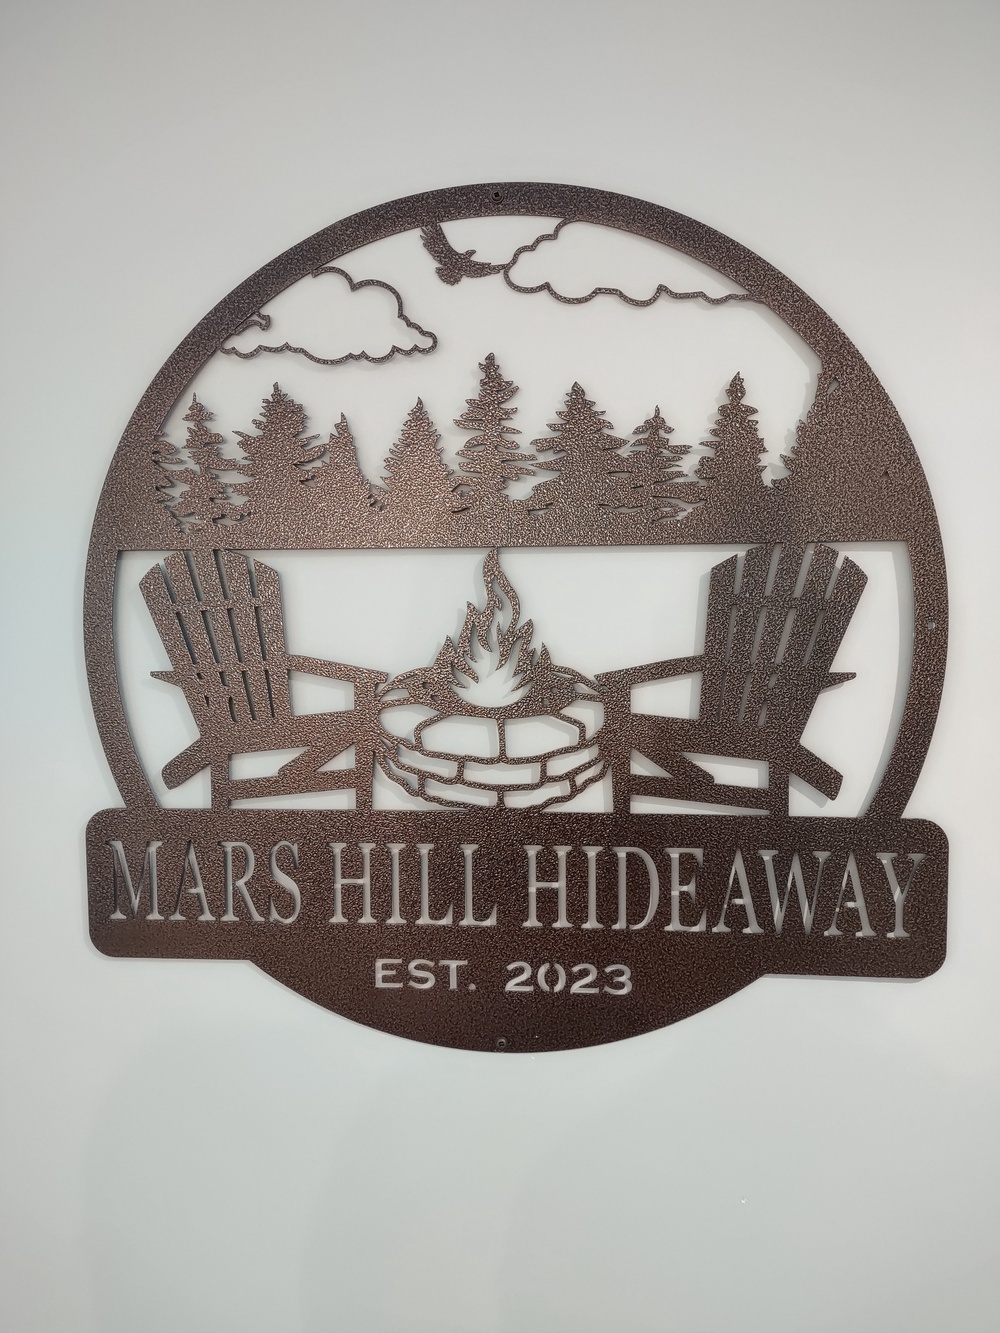 Mars Hill Hideaway